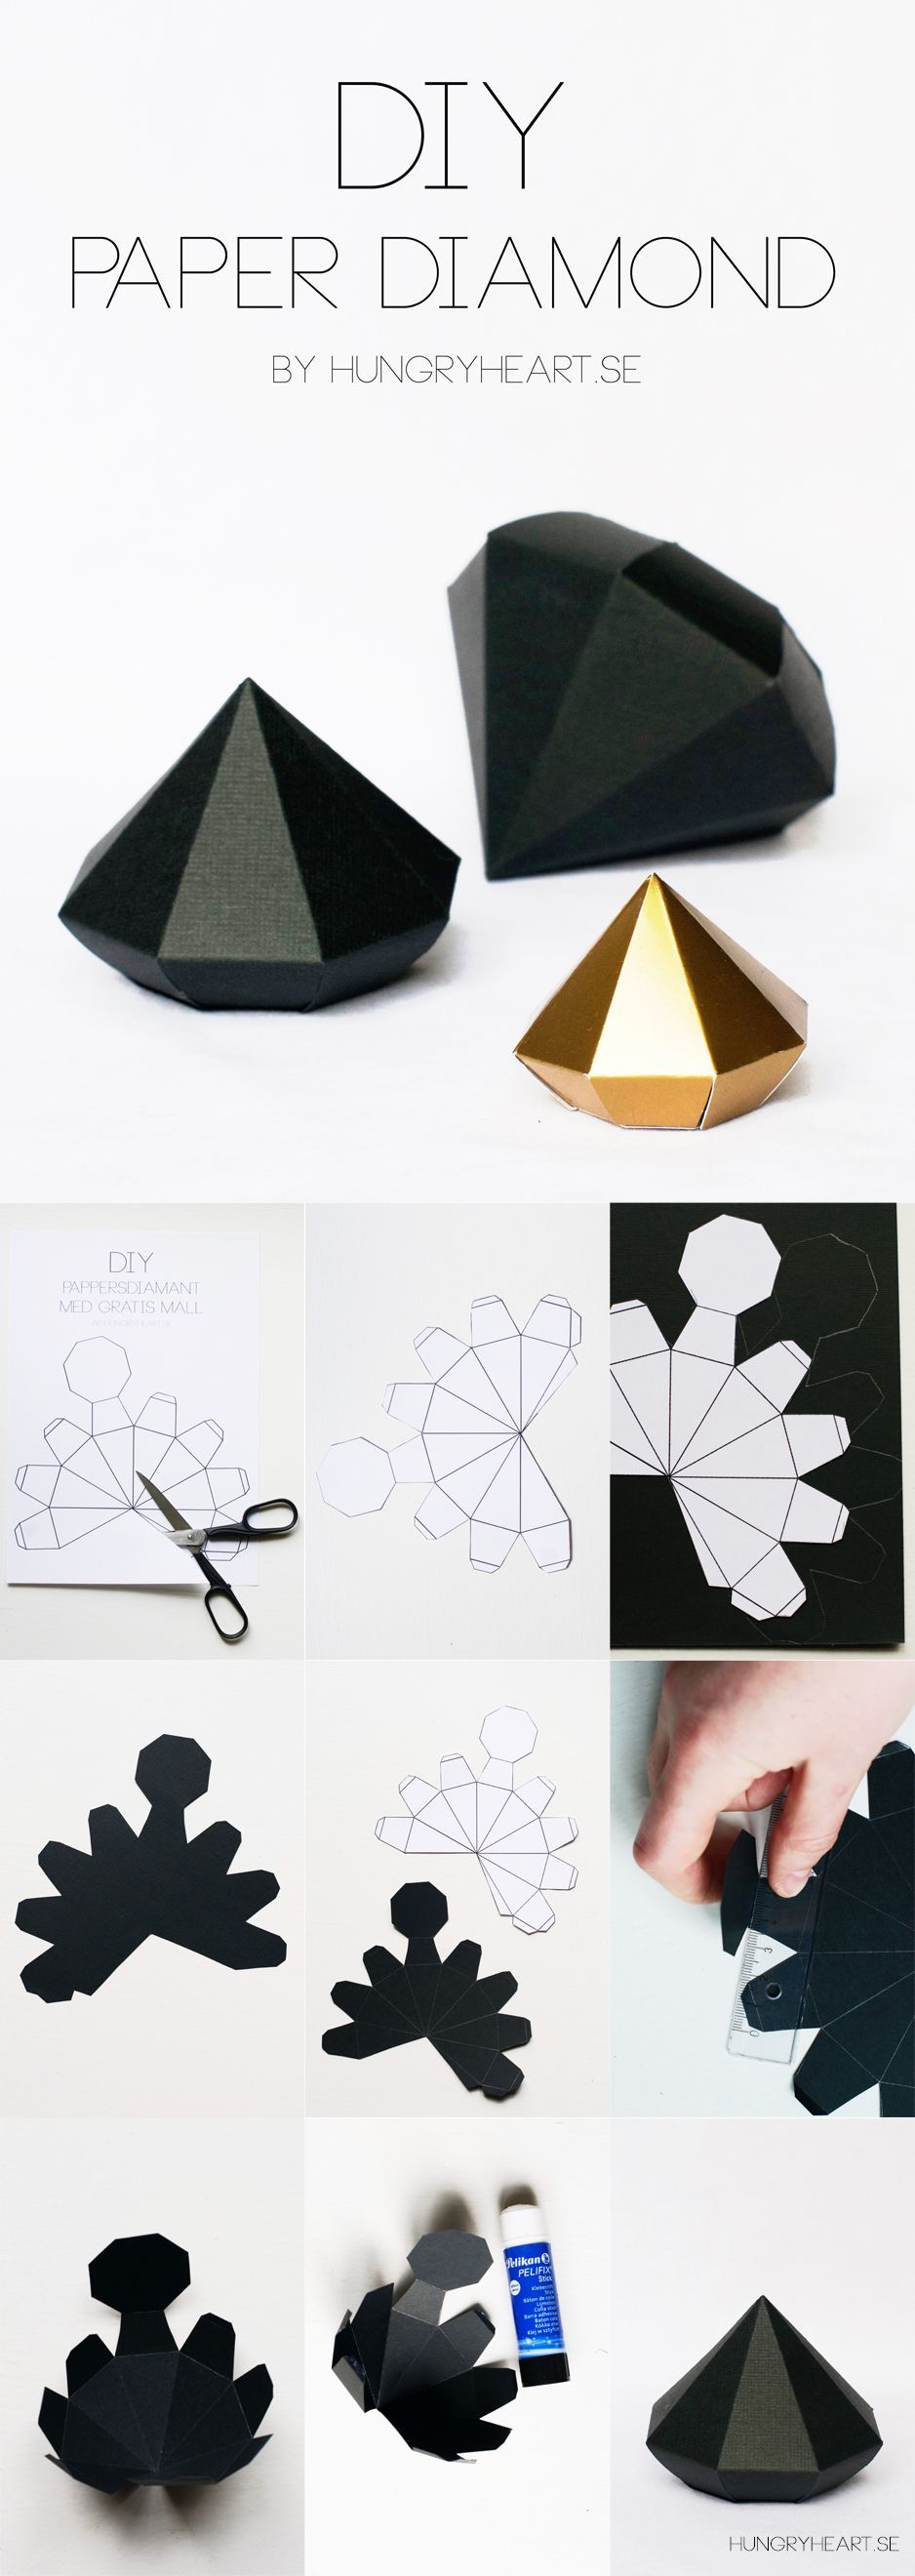 DIY Paper Diamond Tutorial with FREE Printable Template | HungryHeart.se